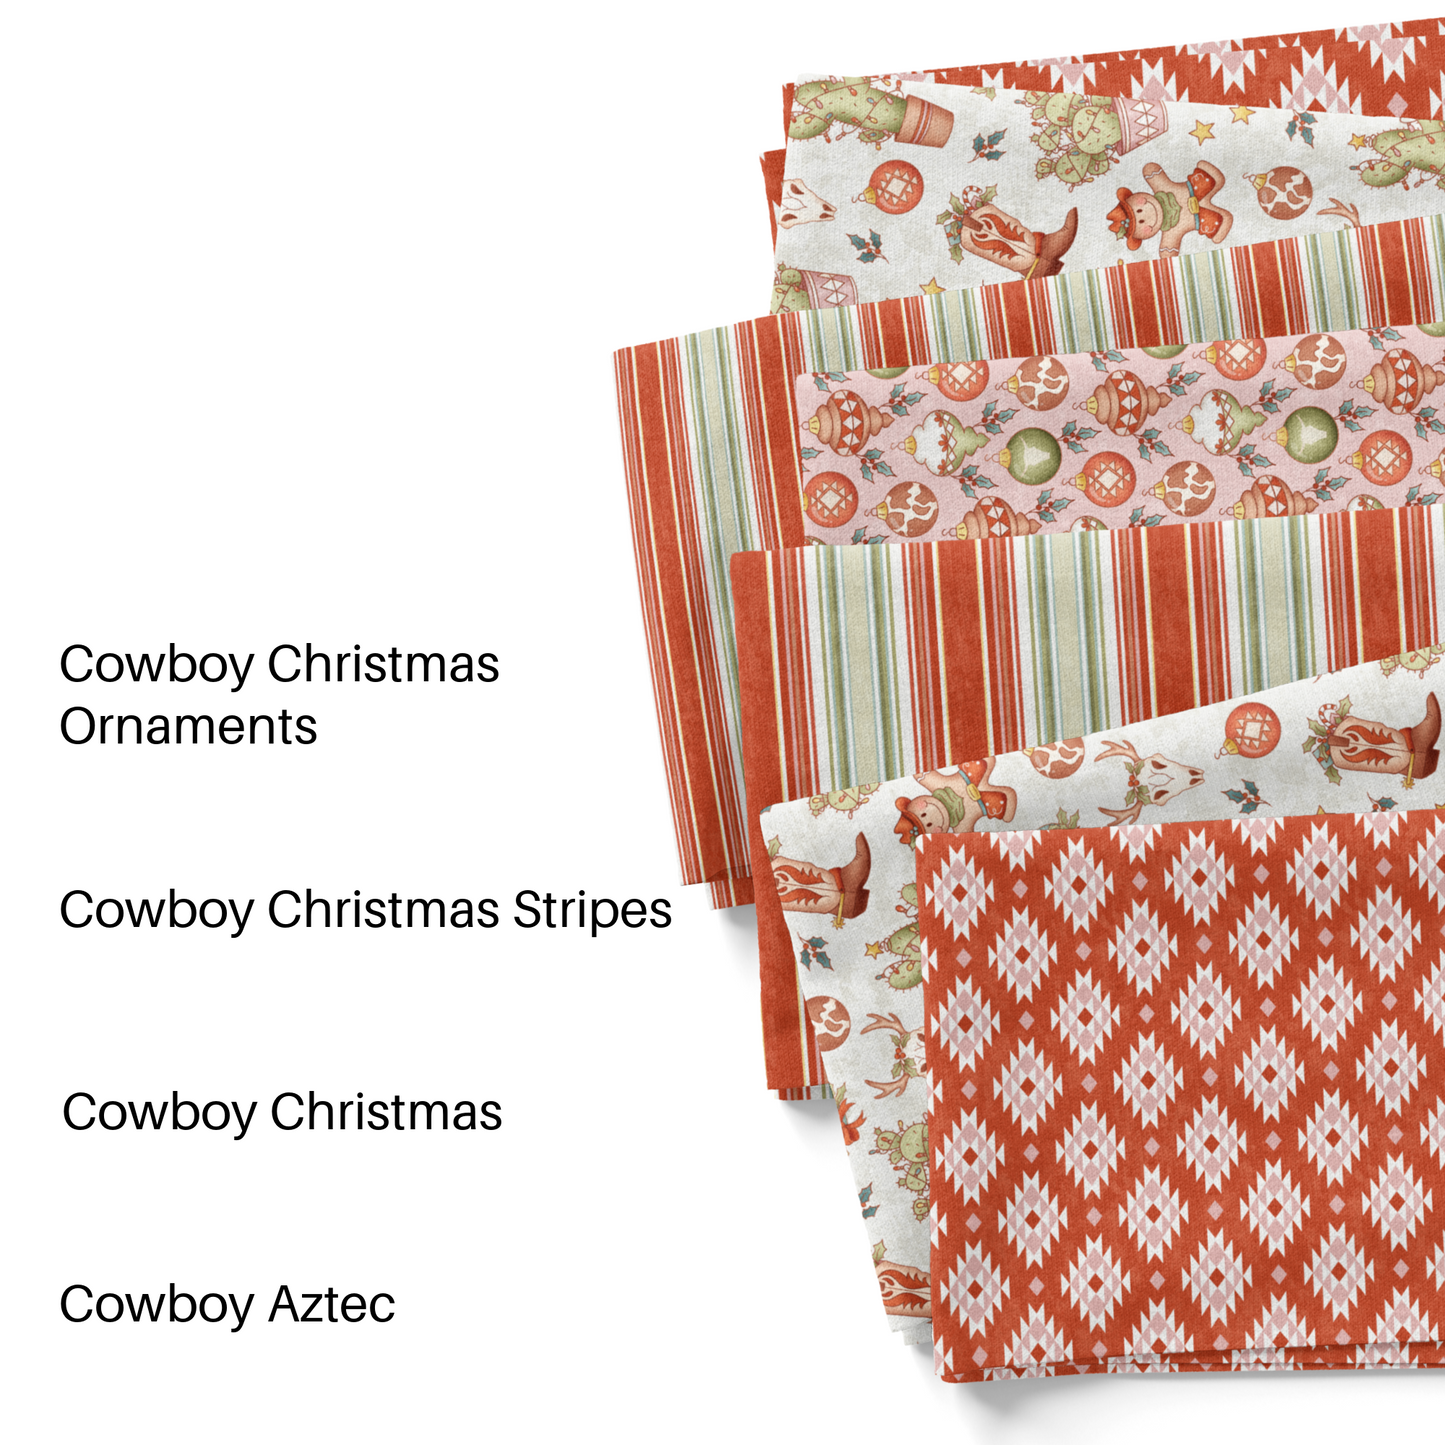 Cowboy Christmas Stripes Fabric By The Yard